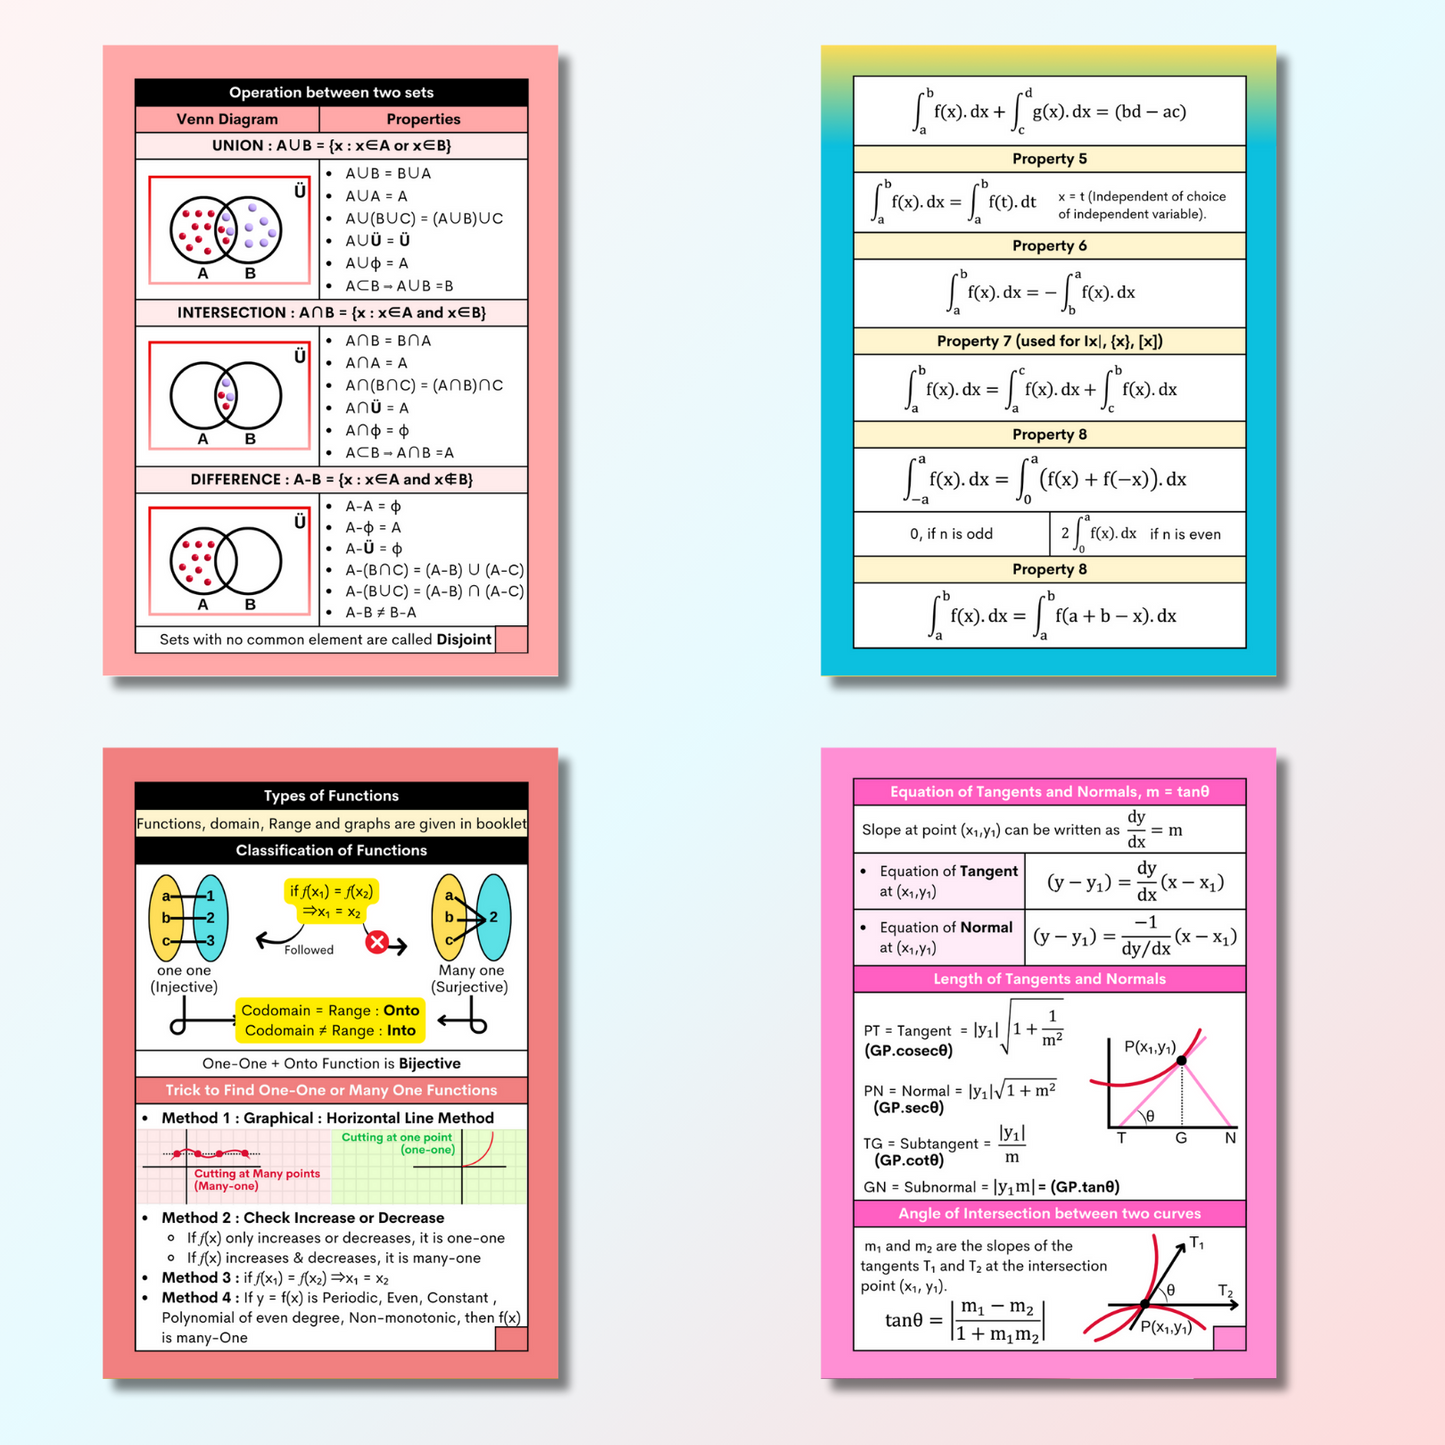 JEE Mathematics Flashcards (Mains/Advanced)